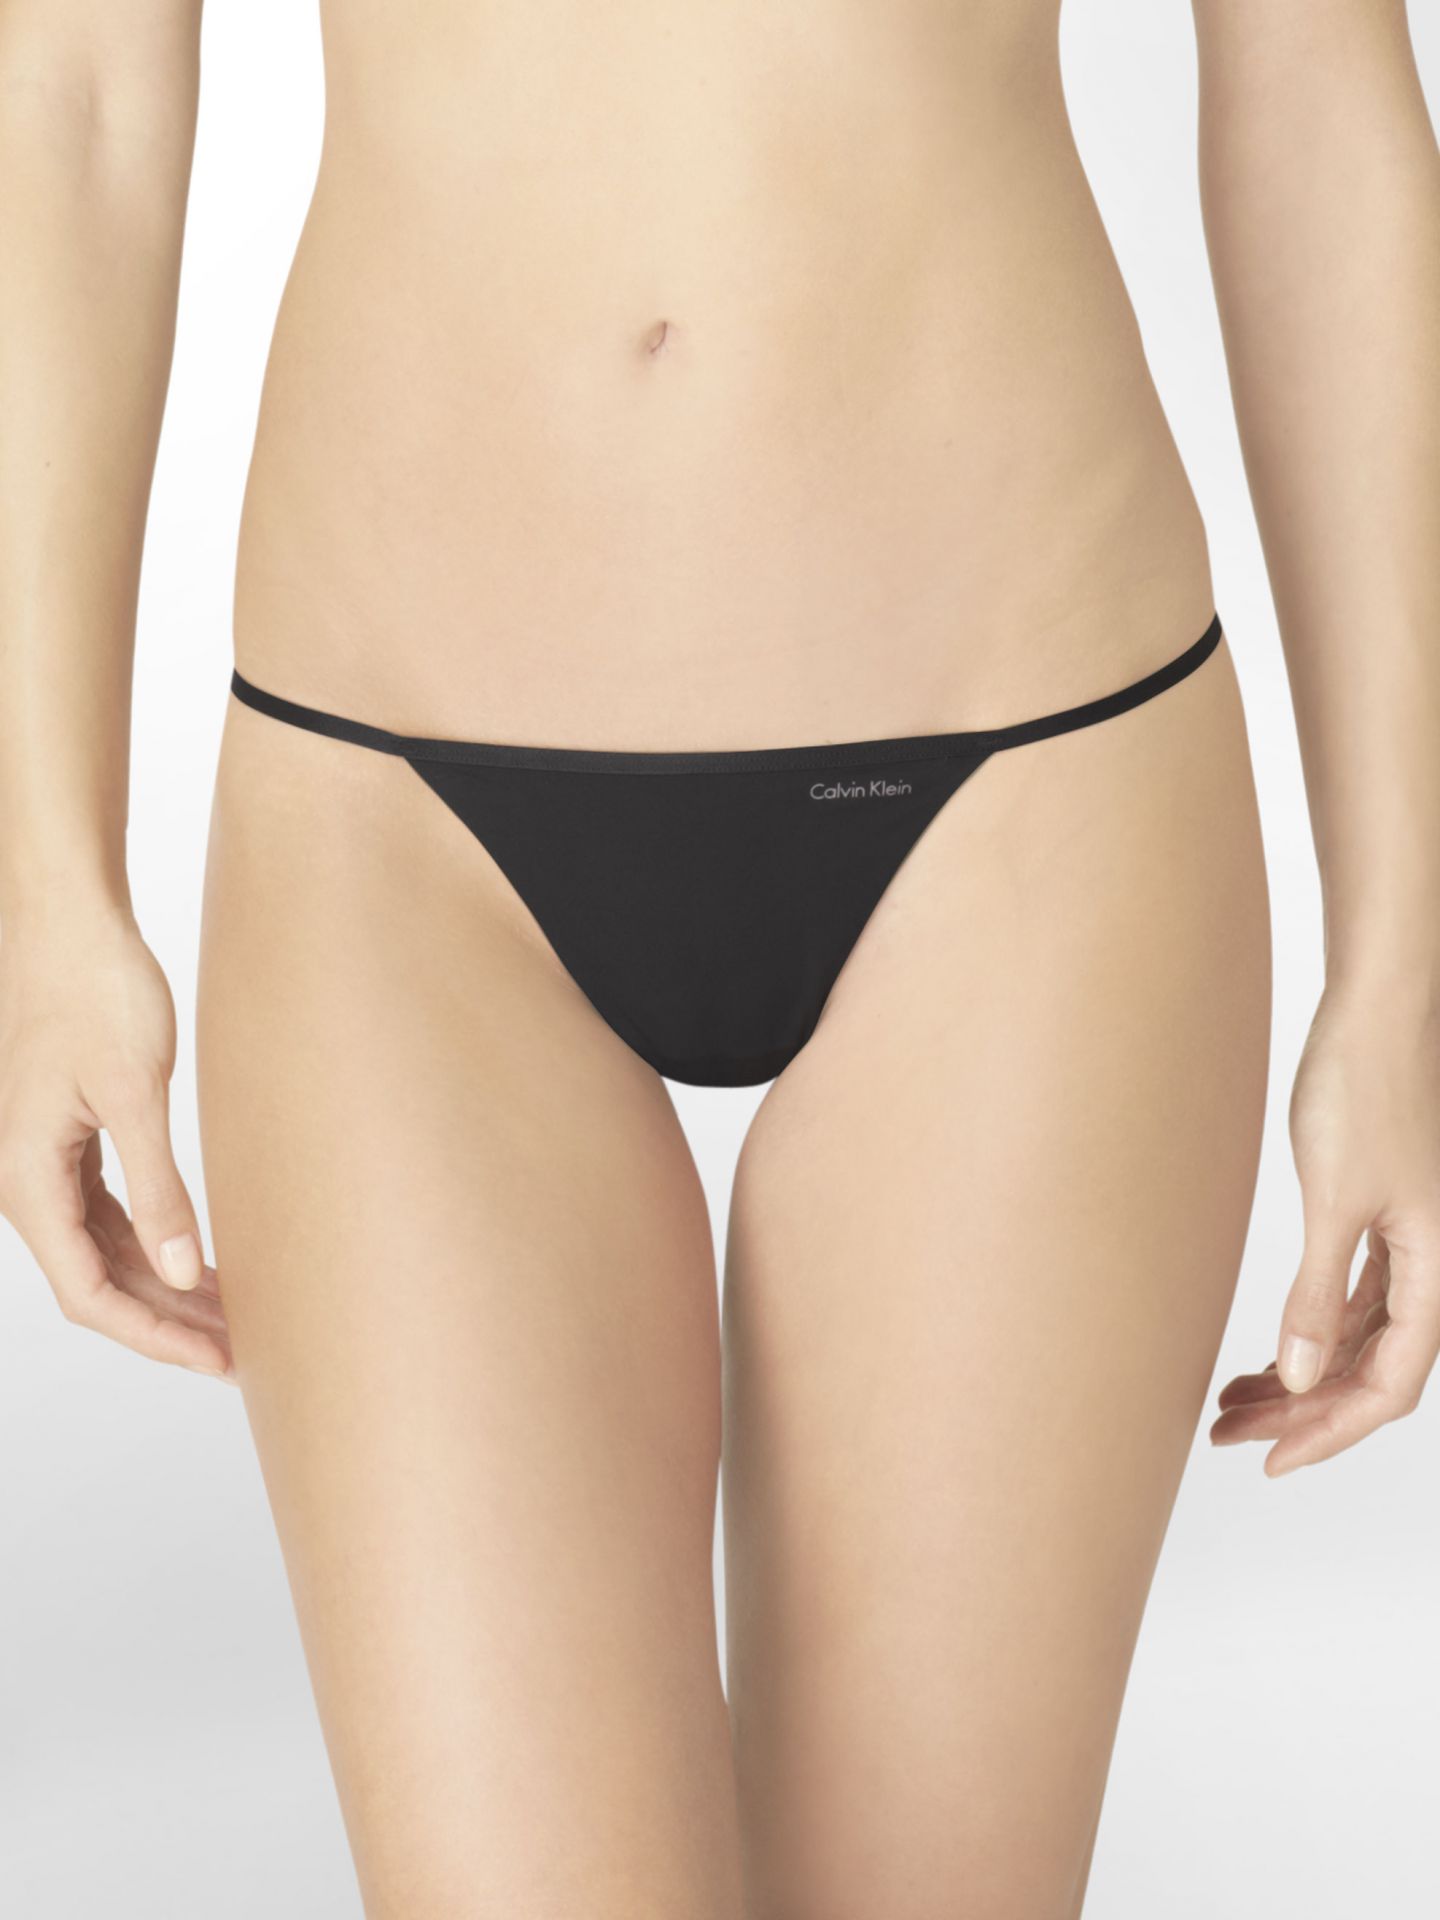 Calvin Klein Sleek Model G String Thong Panties Black Size L D3509 For Sale Online Ebay